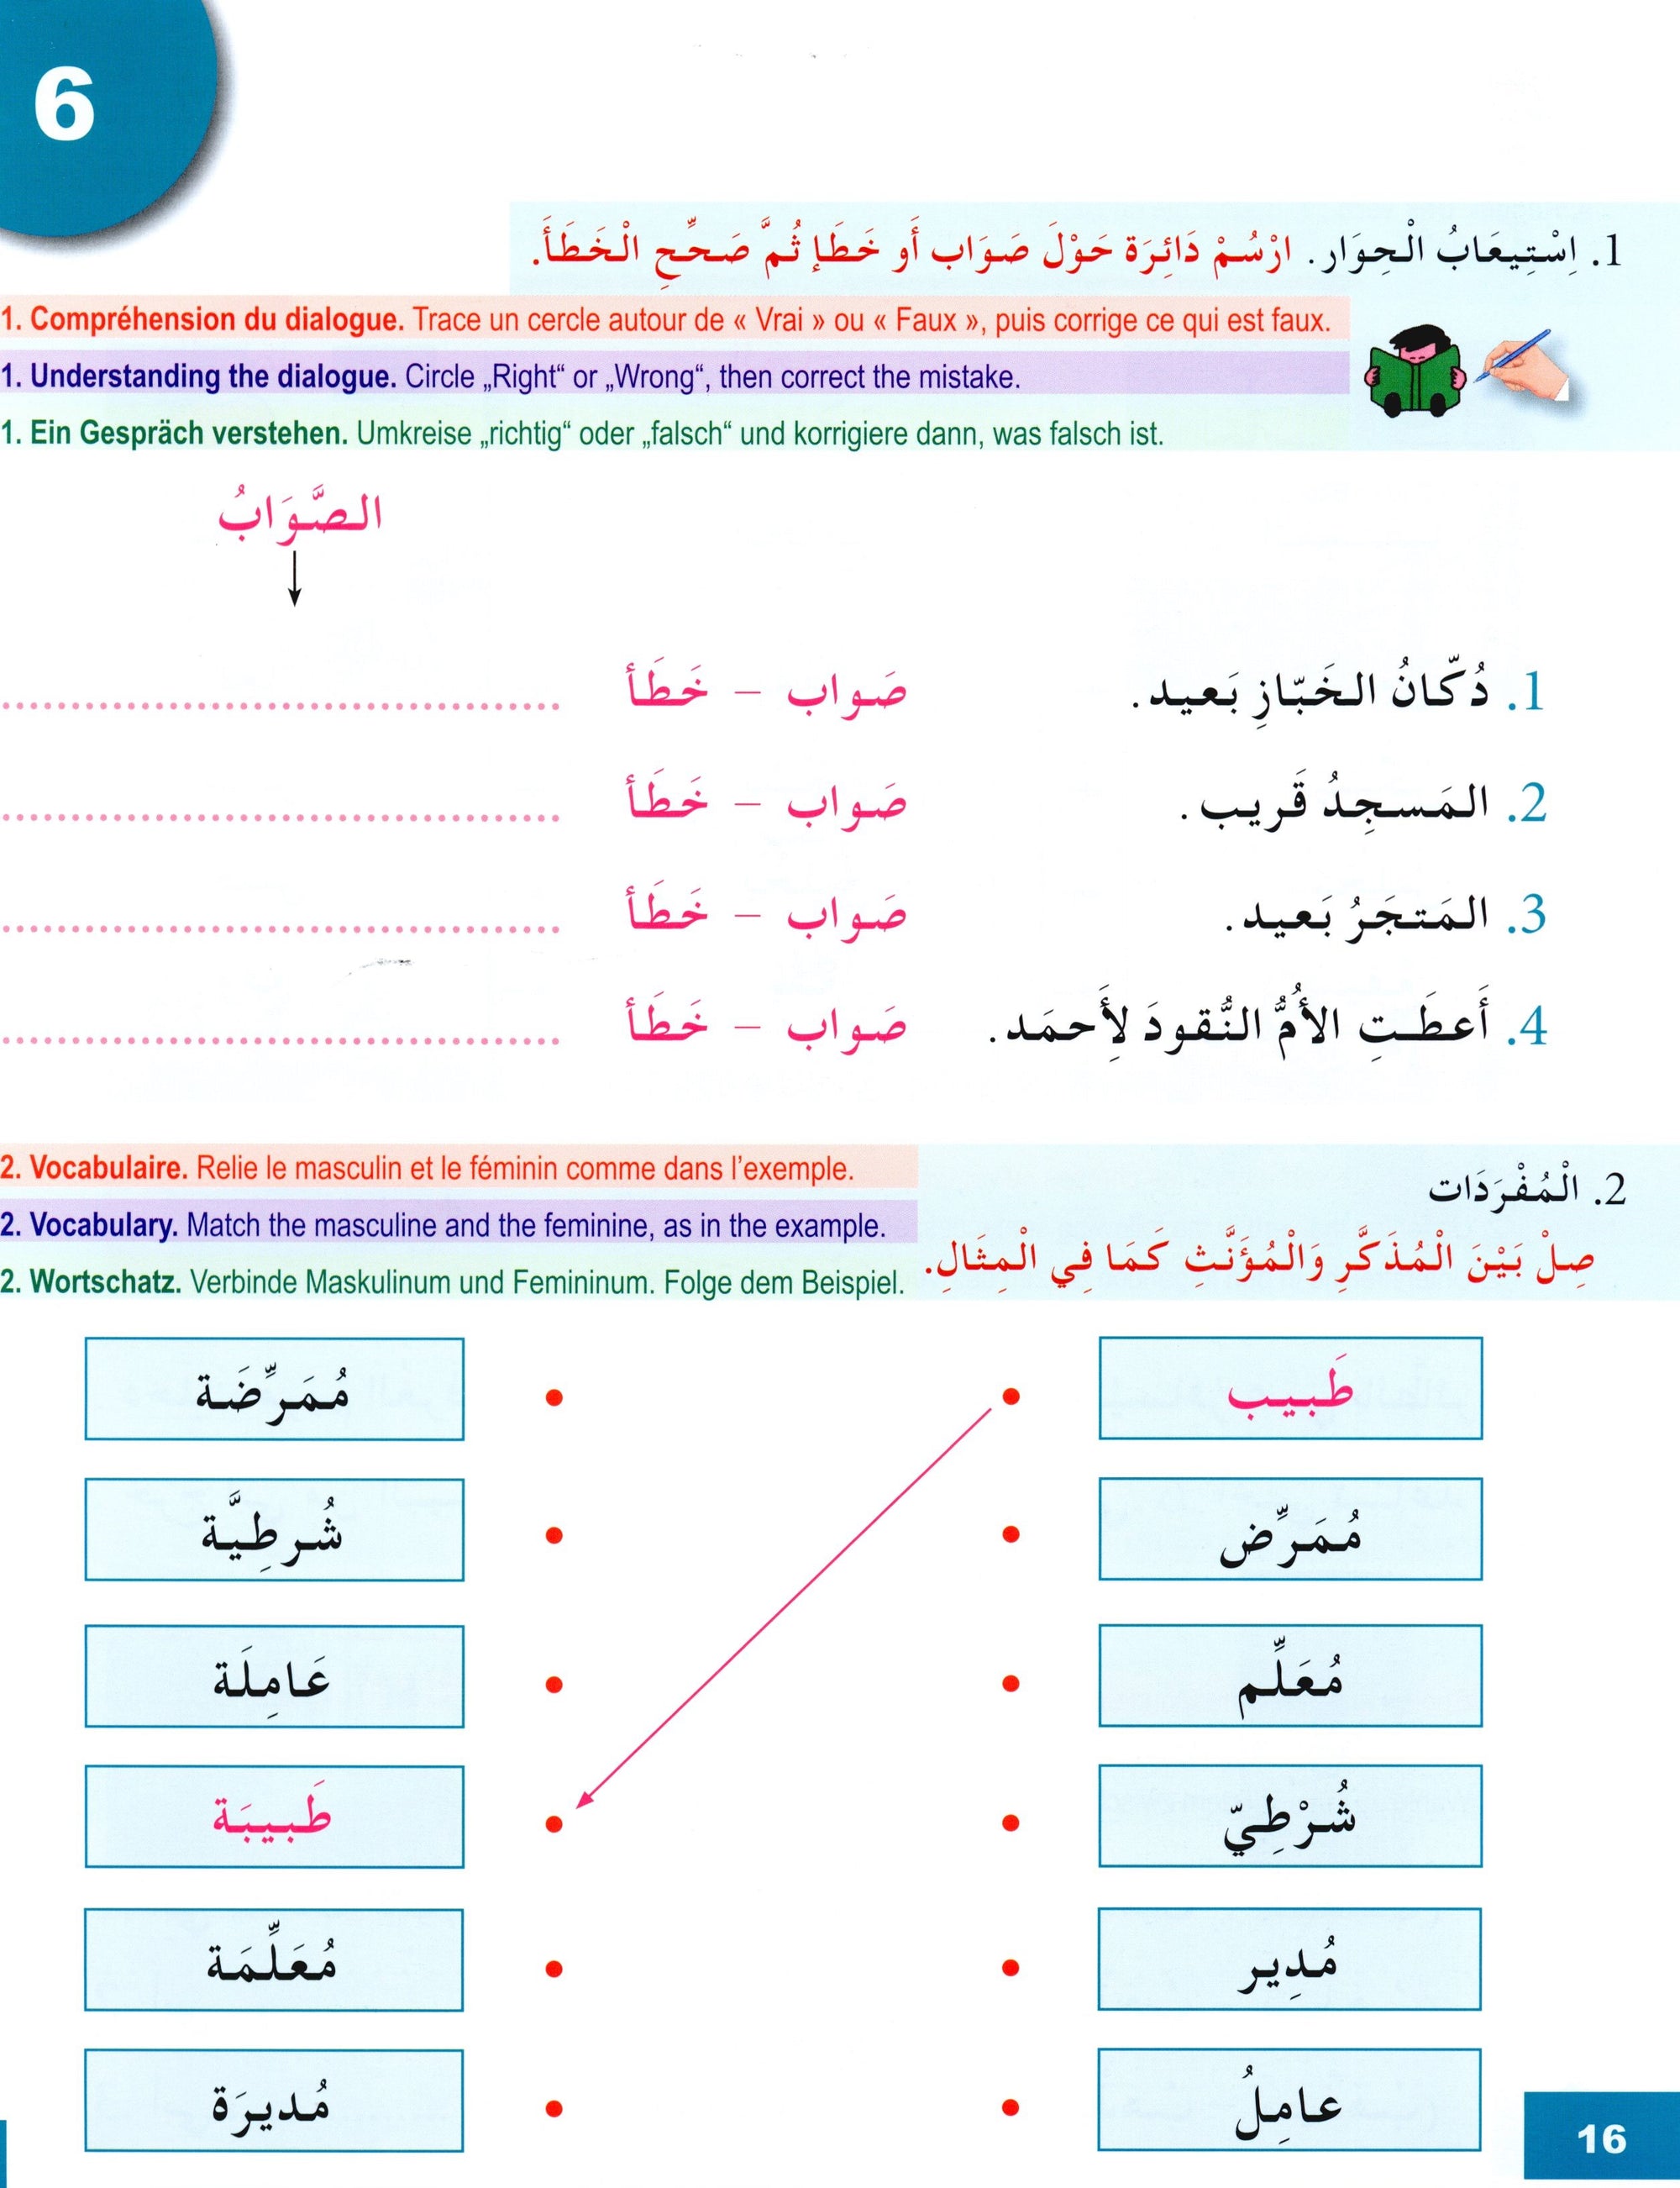 I Learn Arabic Simplified Multi Languages Curriculum Workbook Level 3 أتعلم العربية المنهج الميسر متعدد اللغات كتاب التمارين